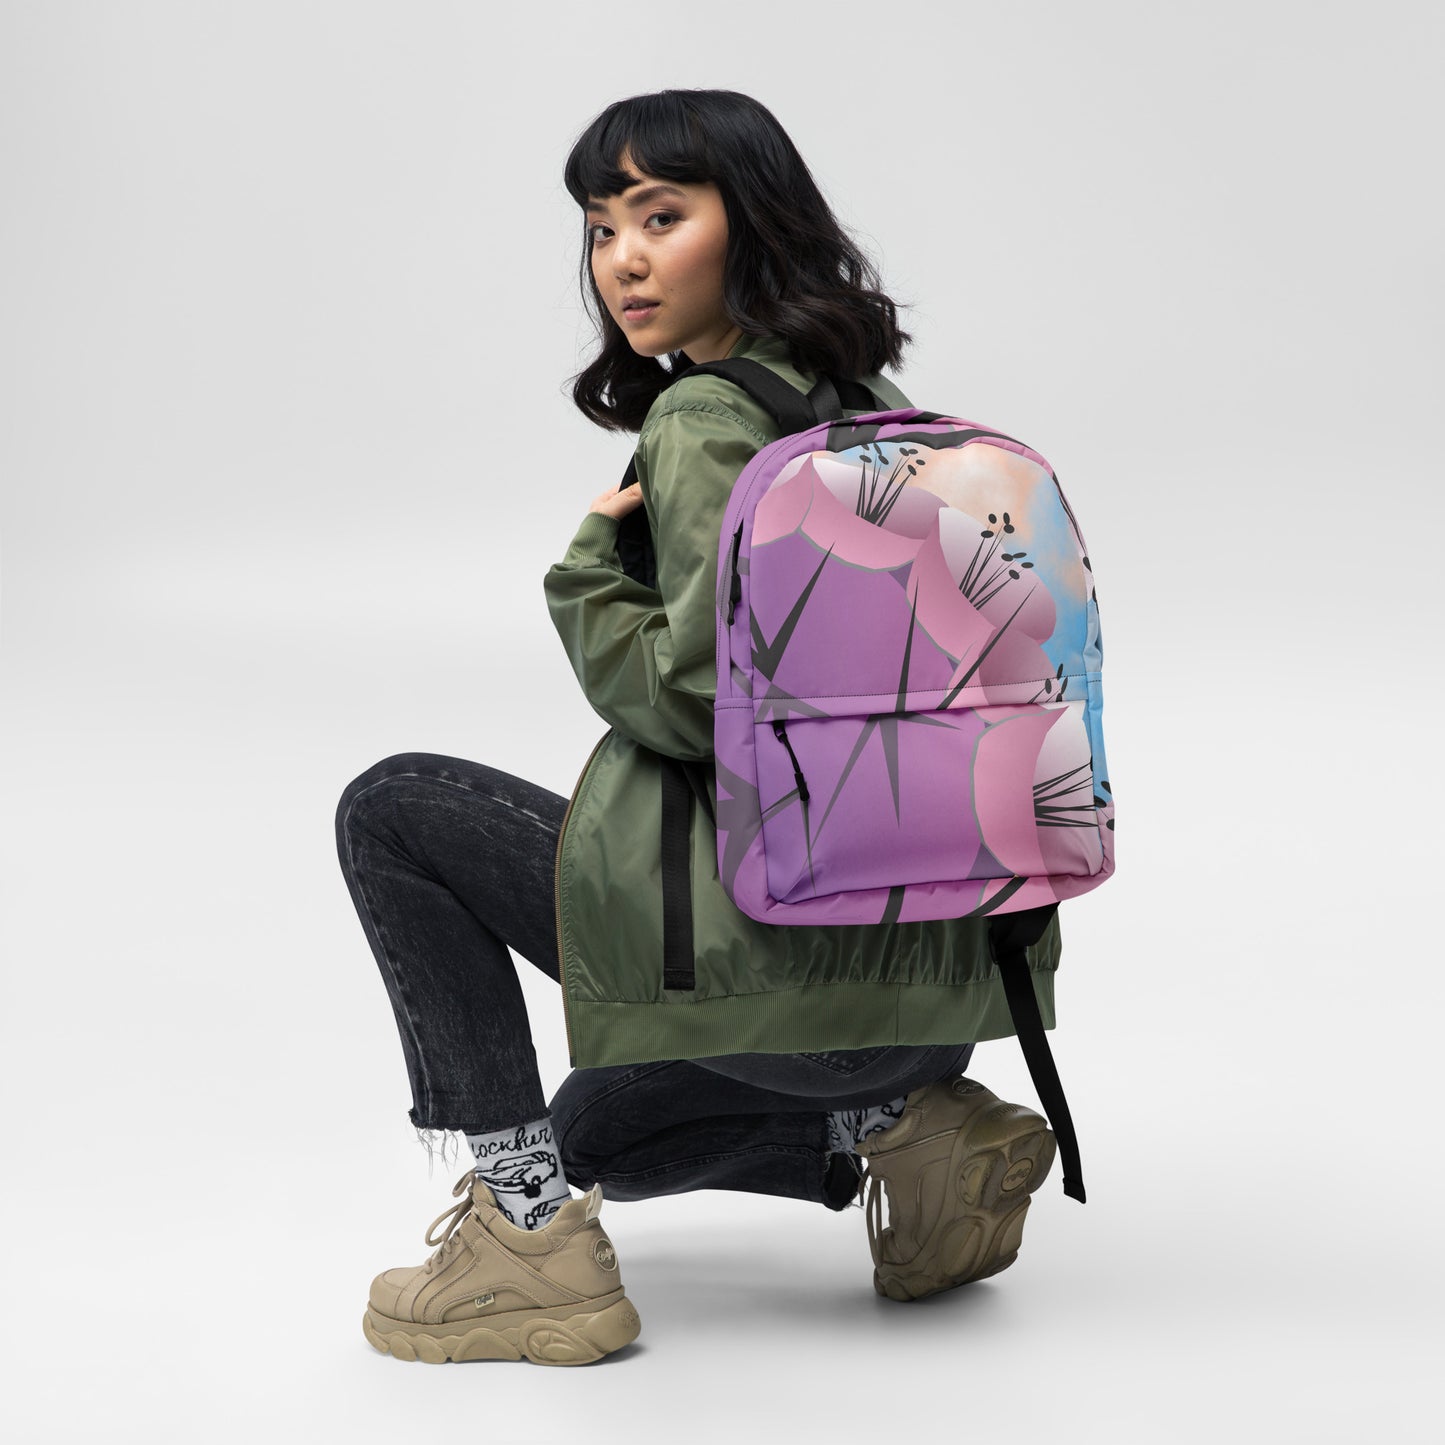 Cacti Purple Backpack